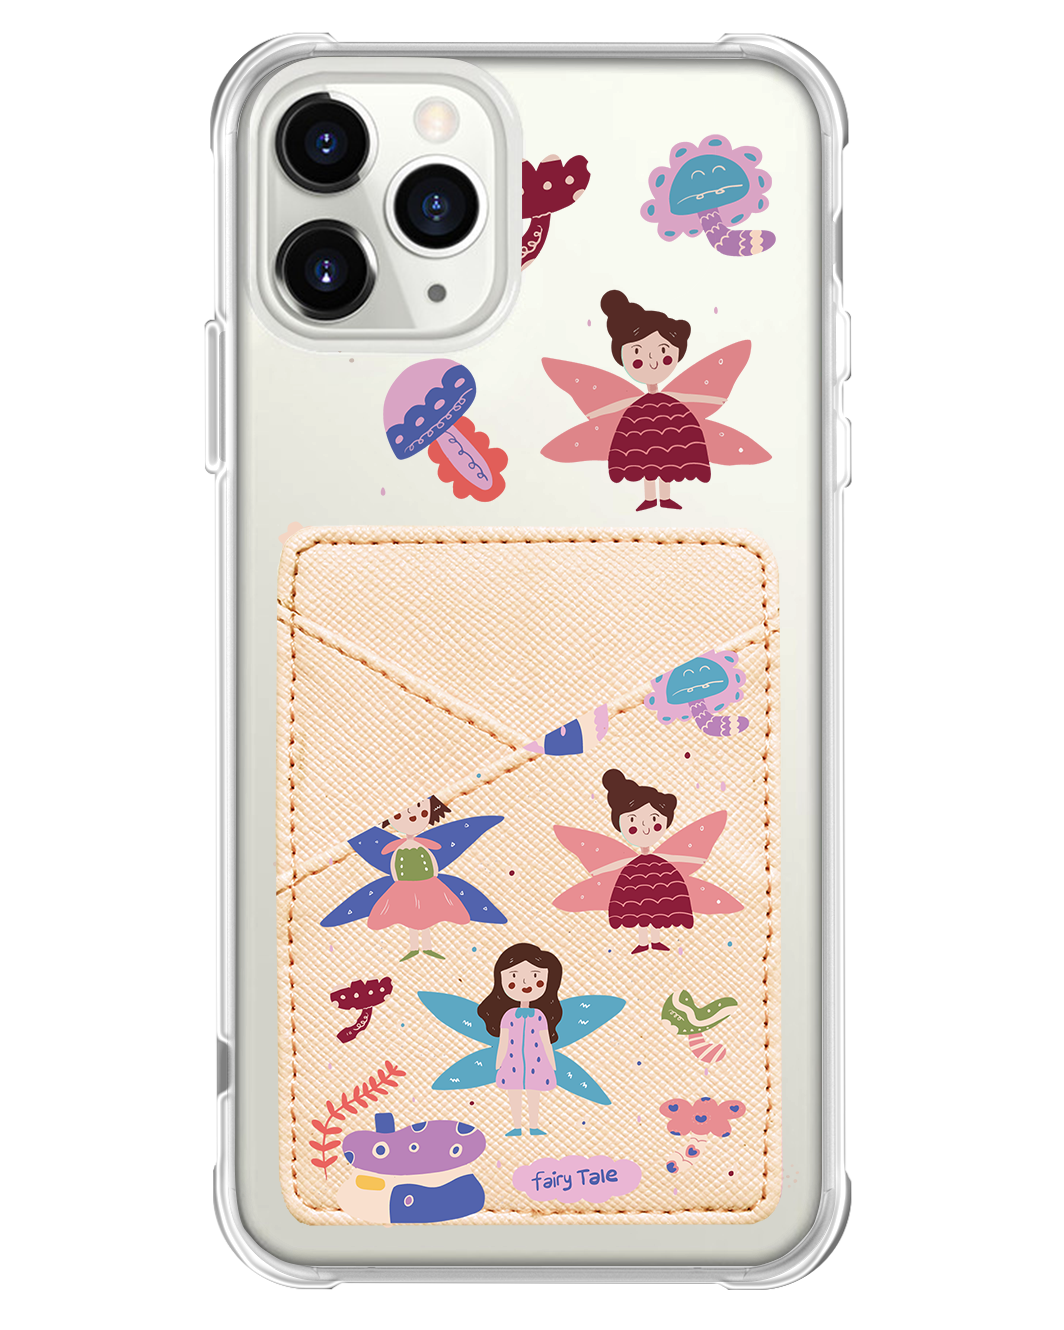 iPhone Phone Wallet Case - Fairytale